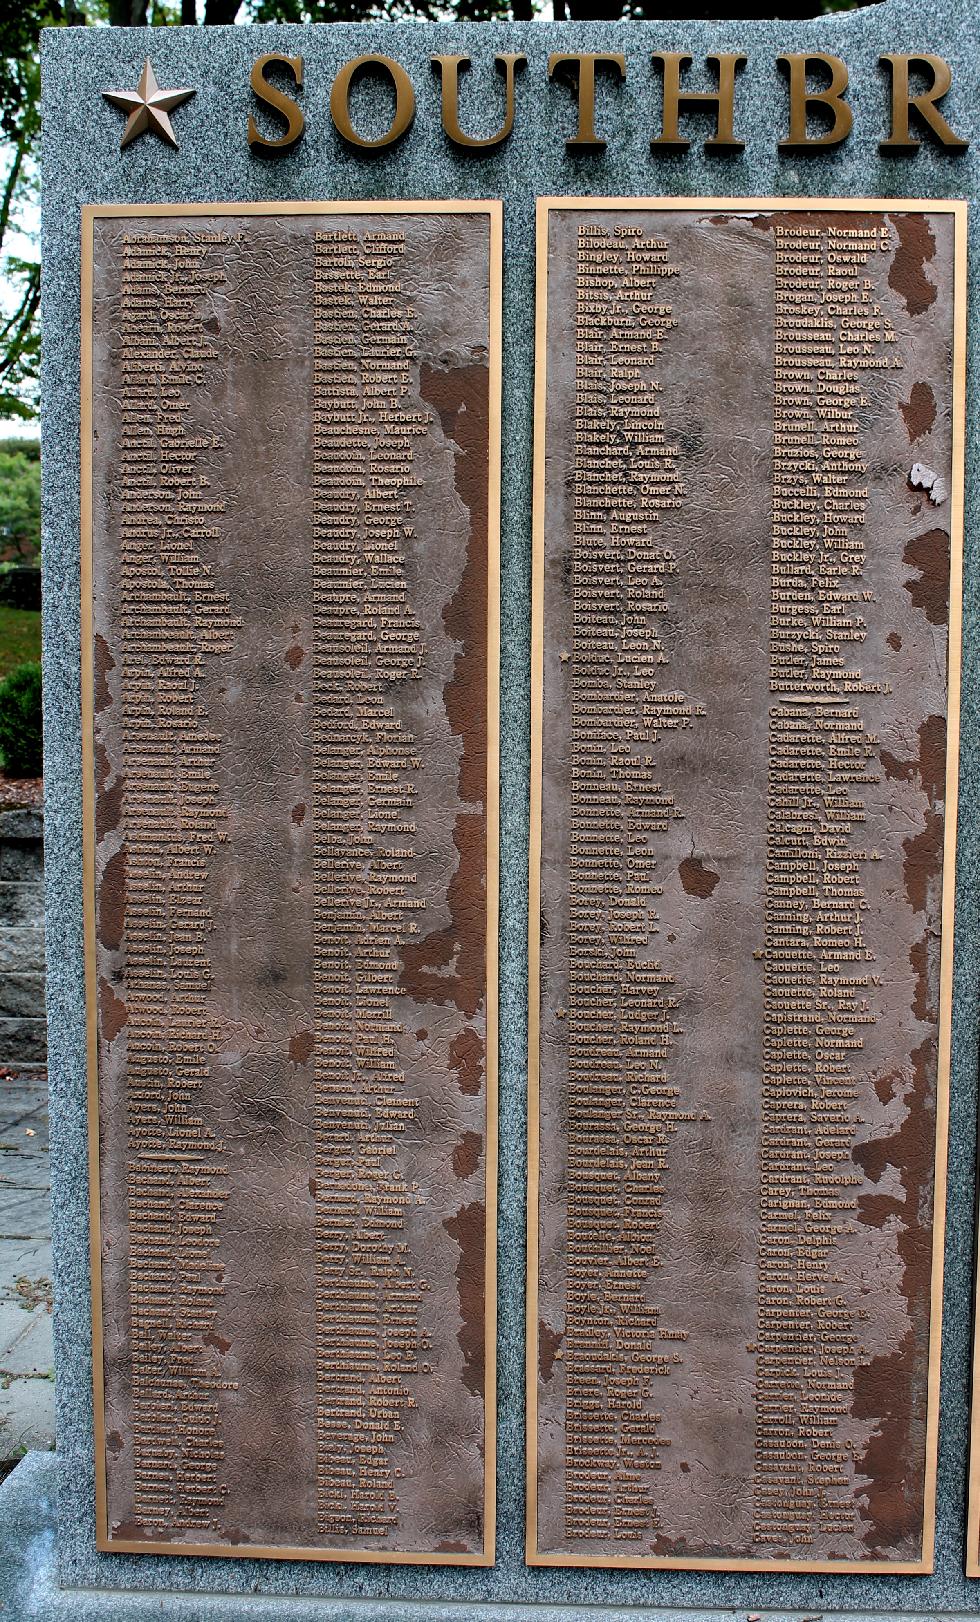 Southbridge Massachusetts World War II Veterans Memorial